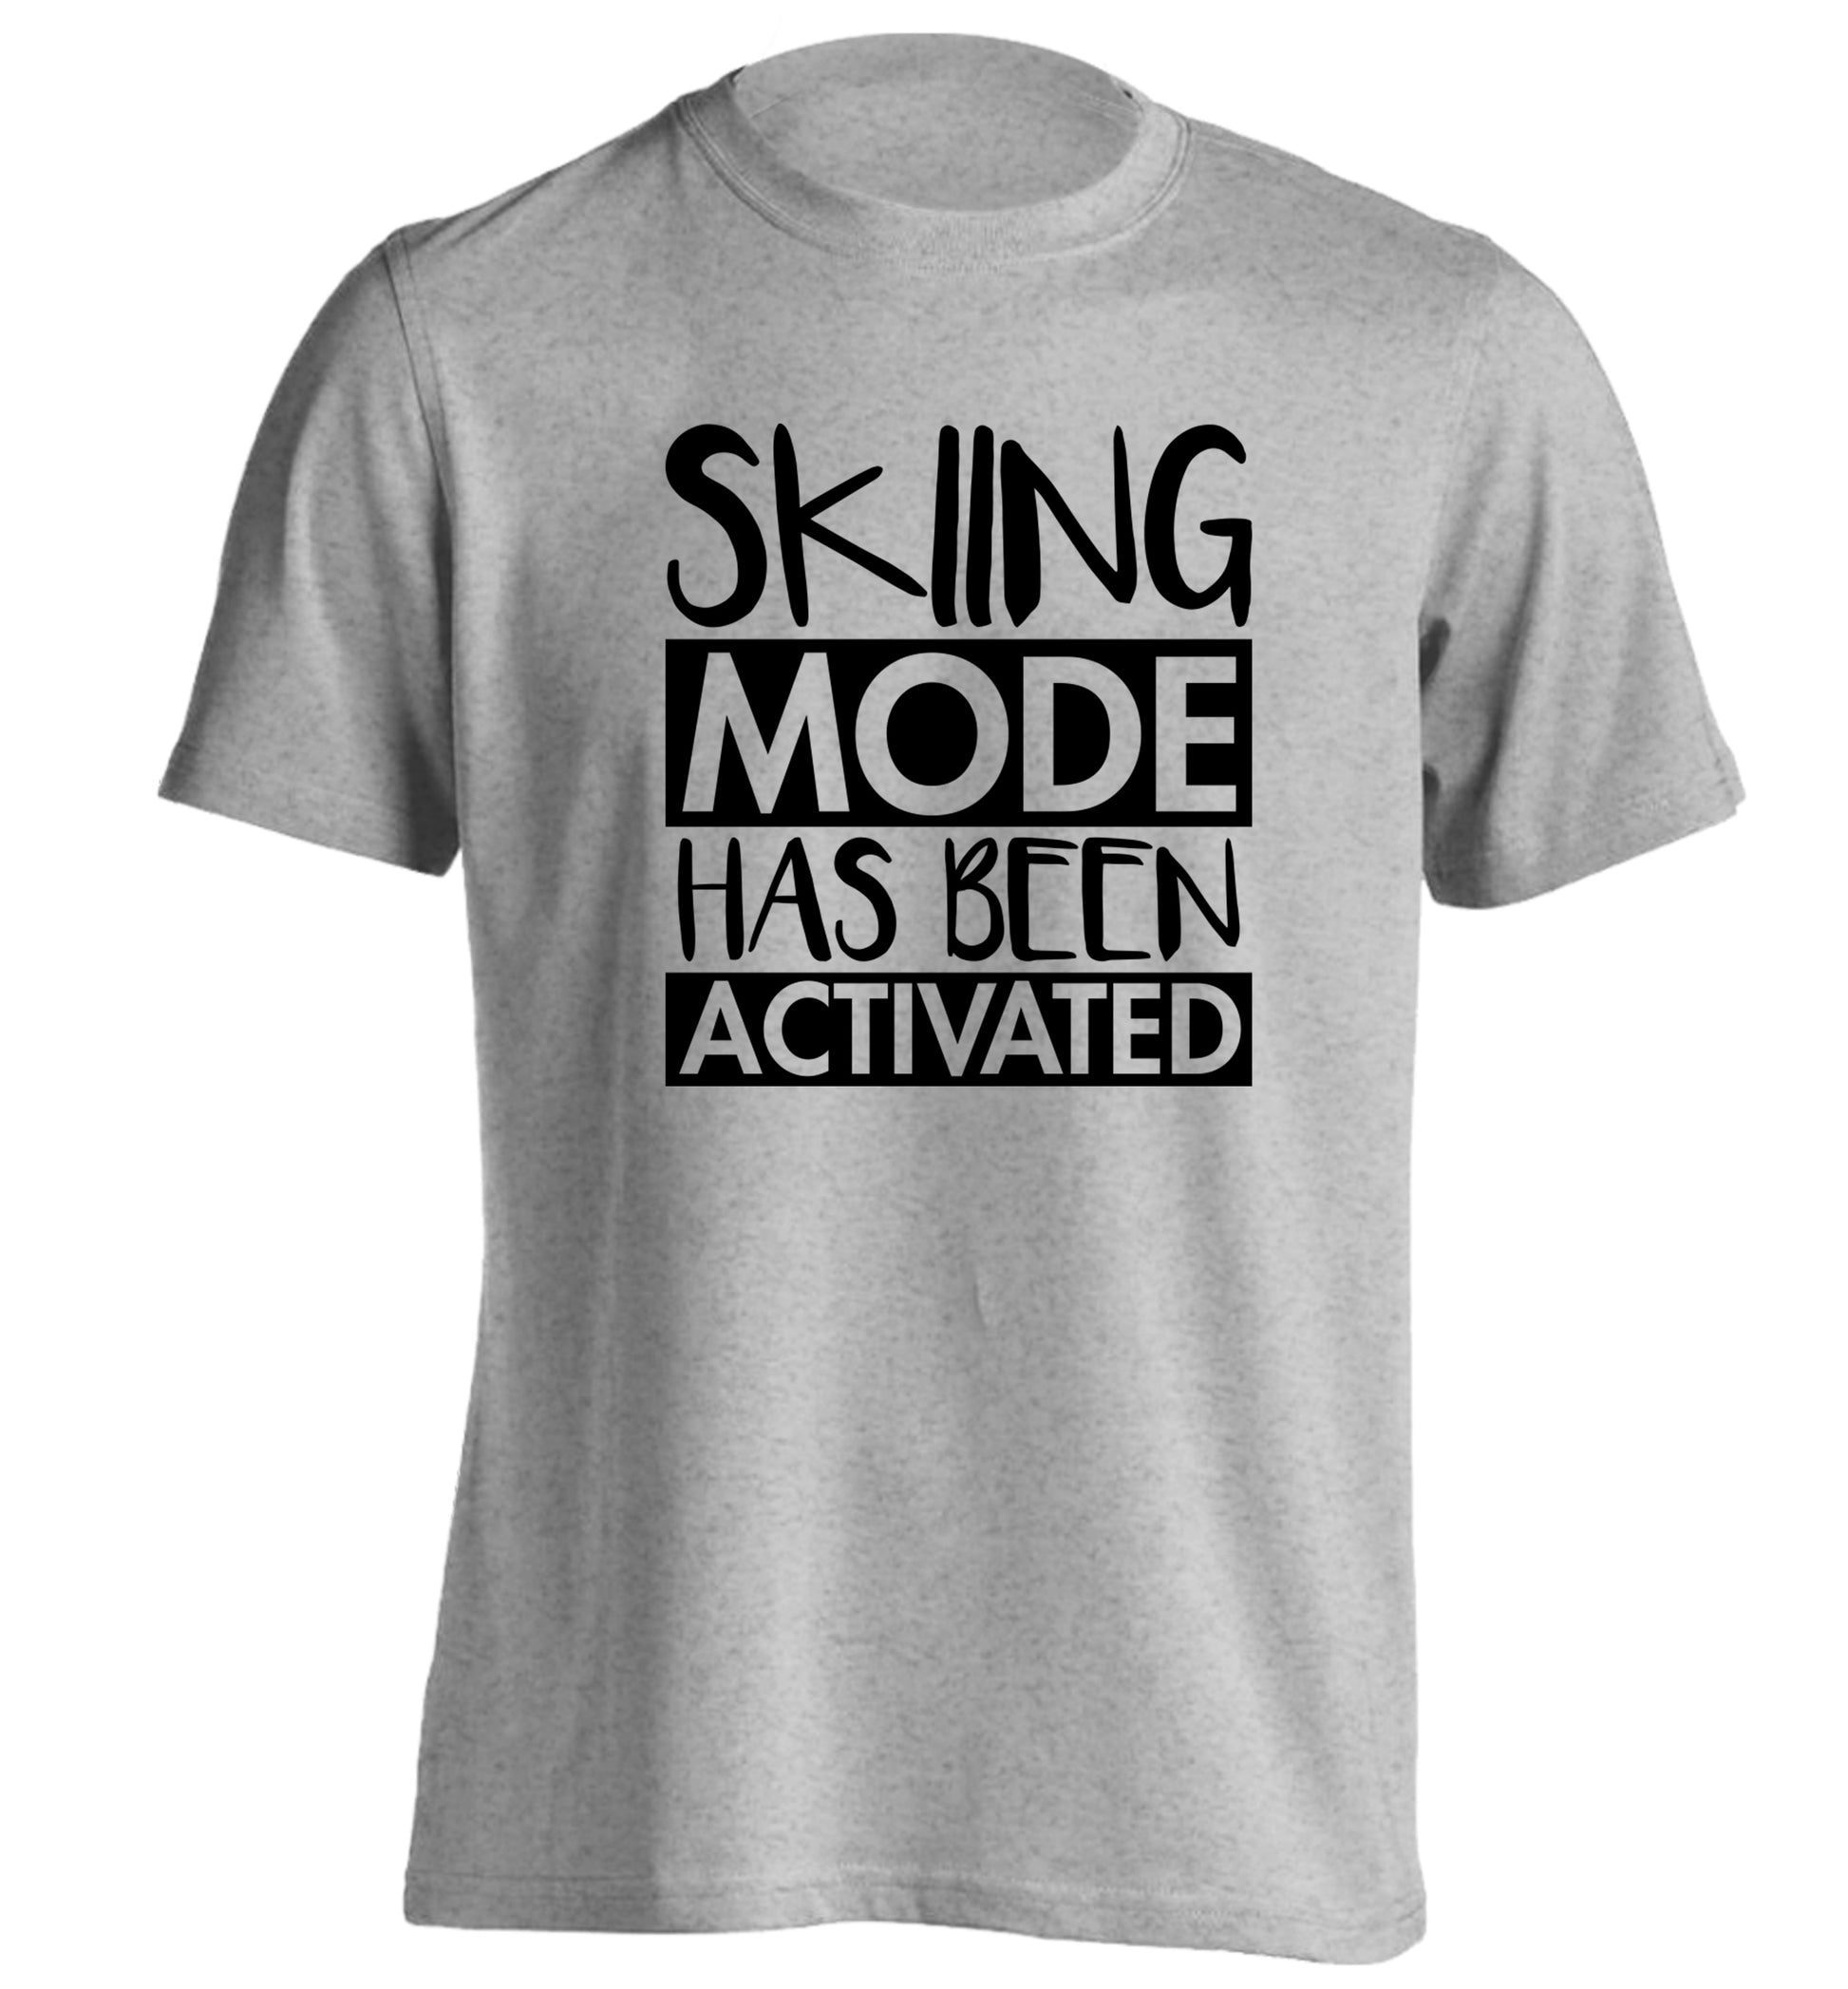 Skiing mode activated adults unisexgrey Tshirt 2XL